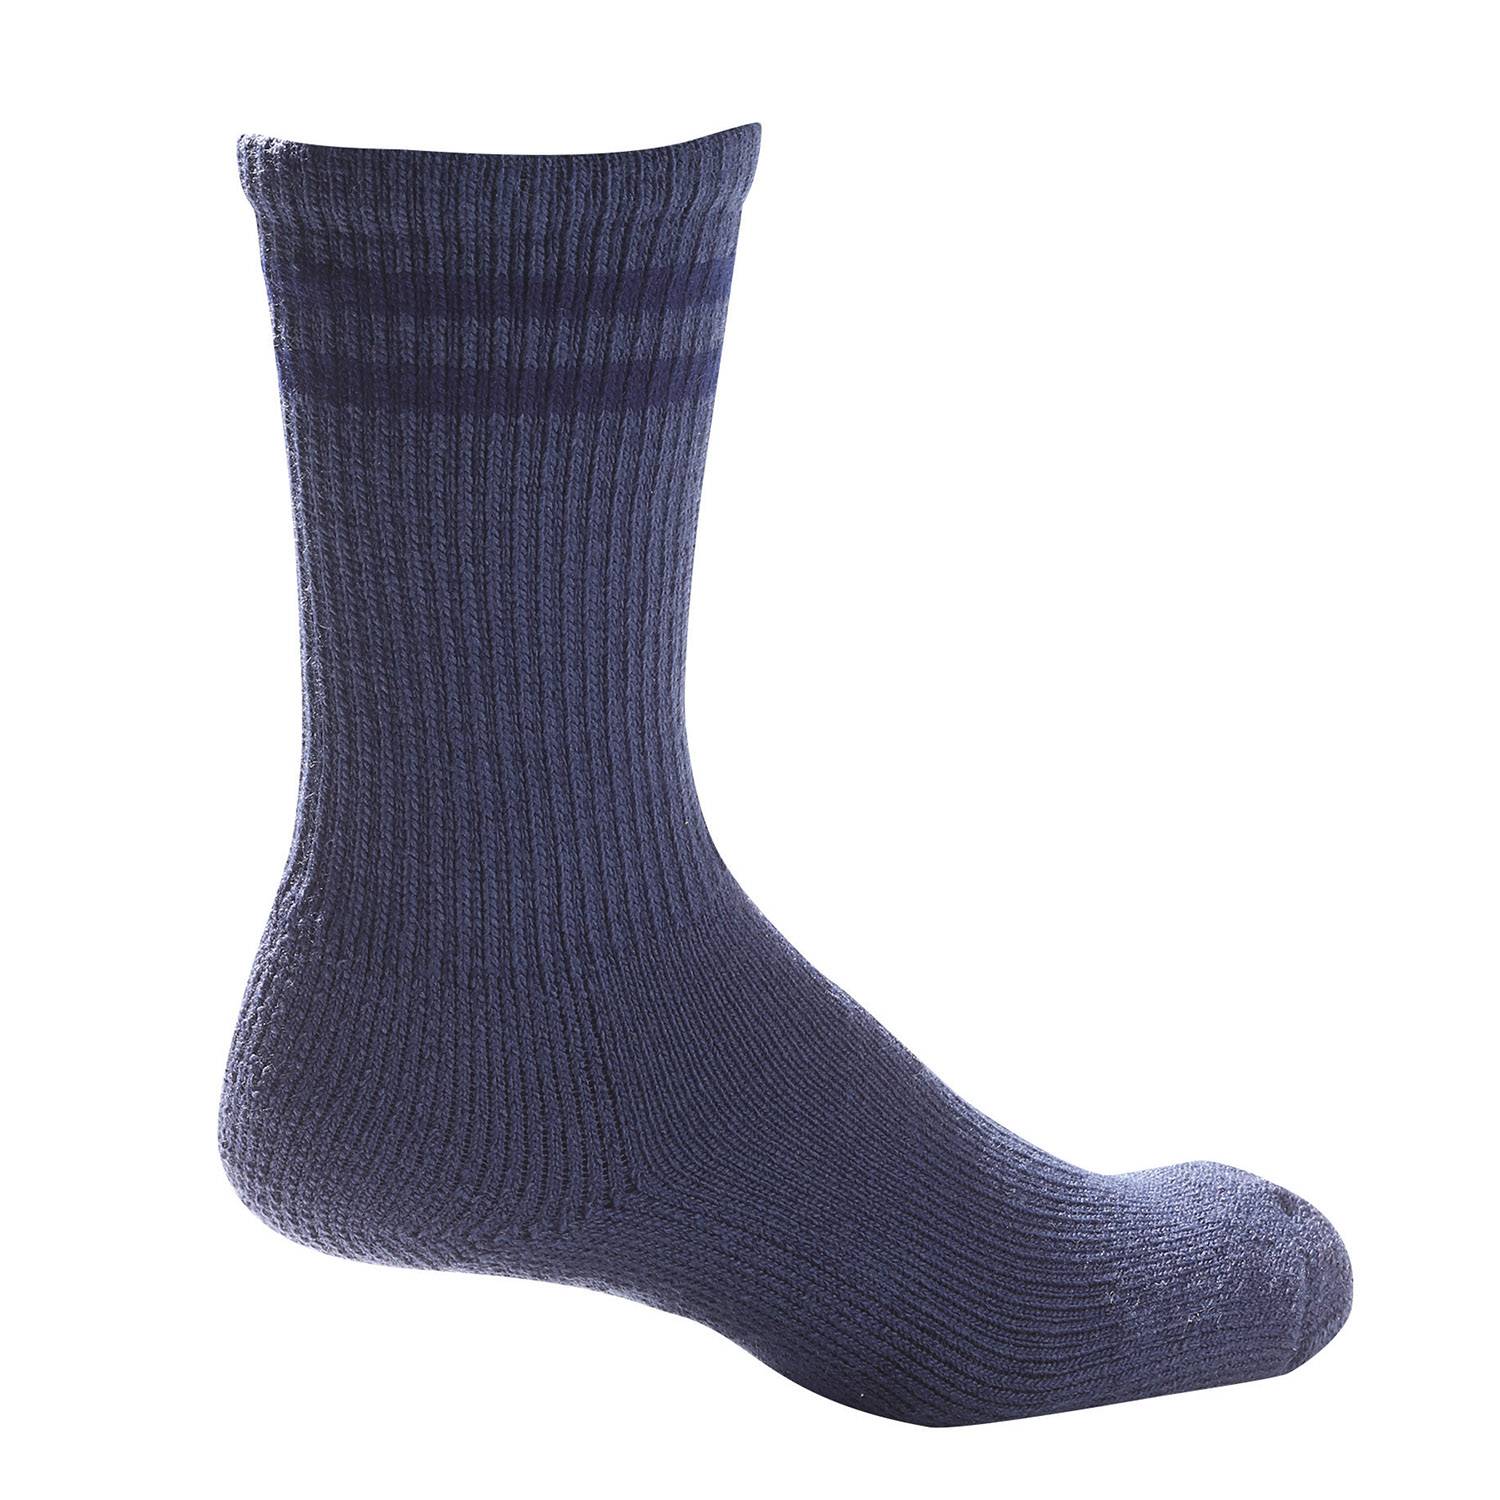 Pro Feet Blue Crew Length Socks with Spandex